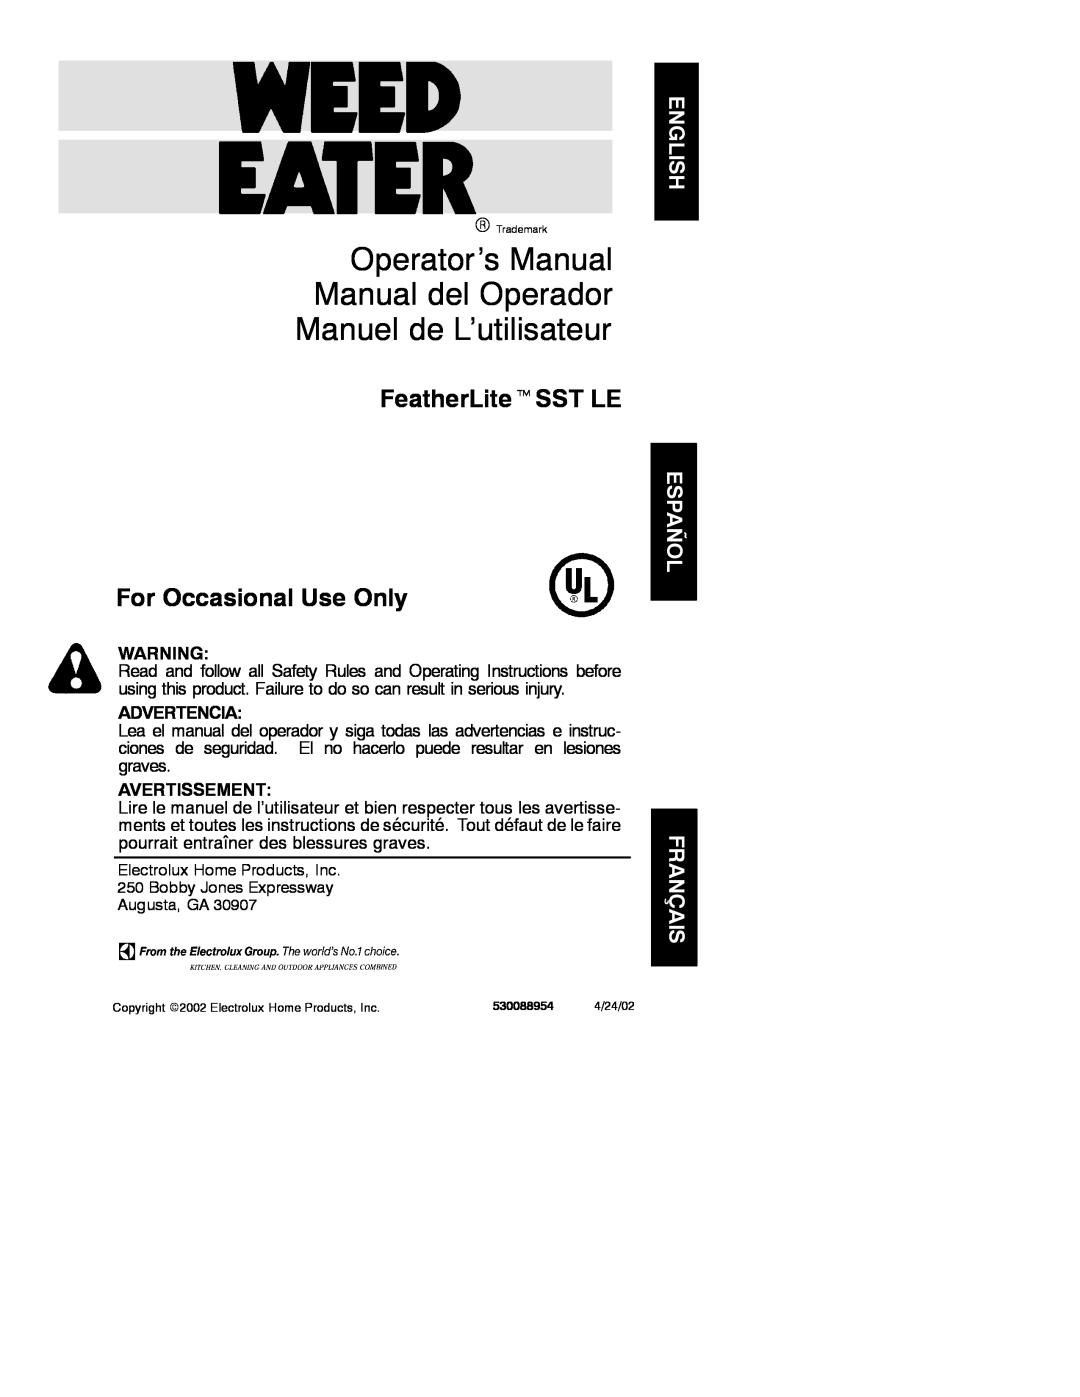 Weed Eater 530088954 manual Operator’s Manual Manual del Operador Manuel de L’utilisateur, Advertencia, Avertissement 